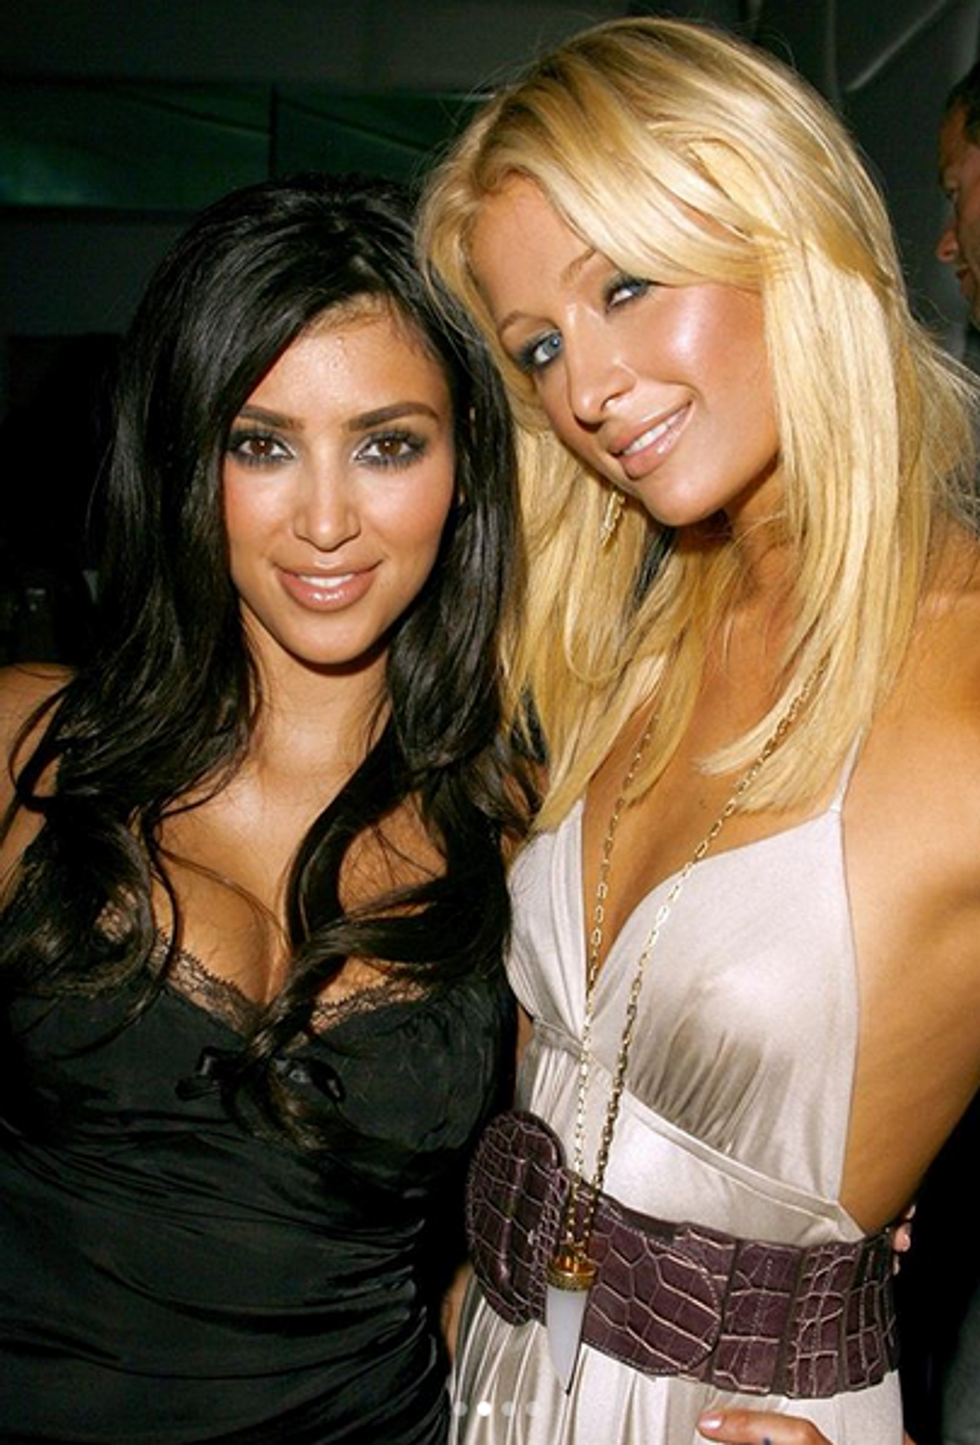 TBT: See Photos of Paris Hilton and Kim Kardashian When They Were